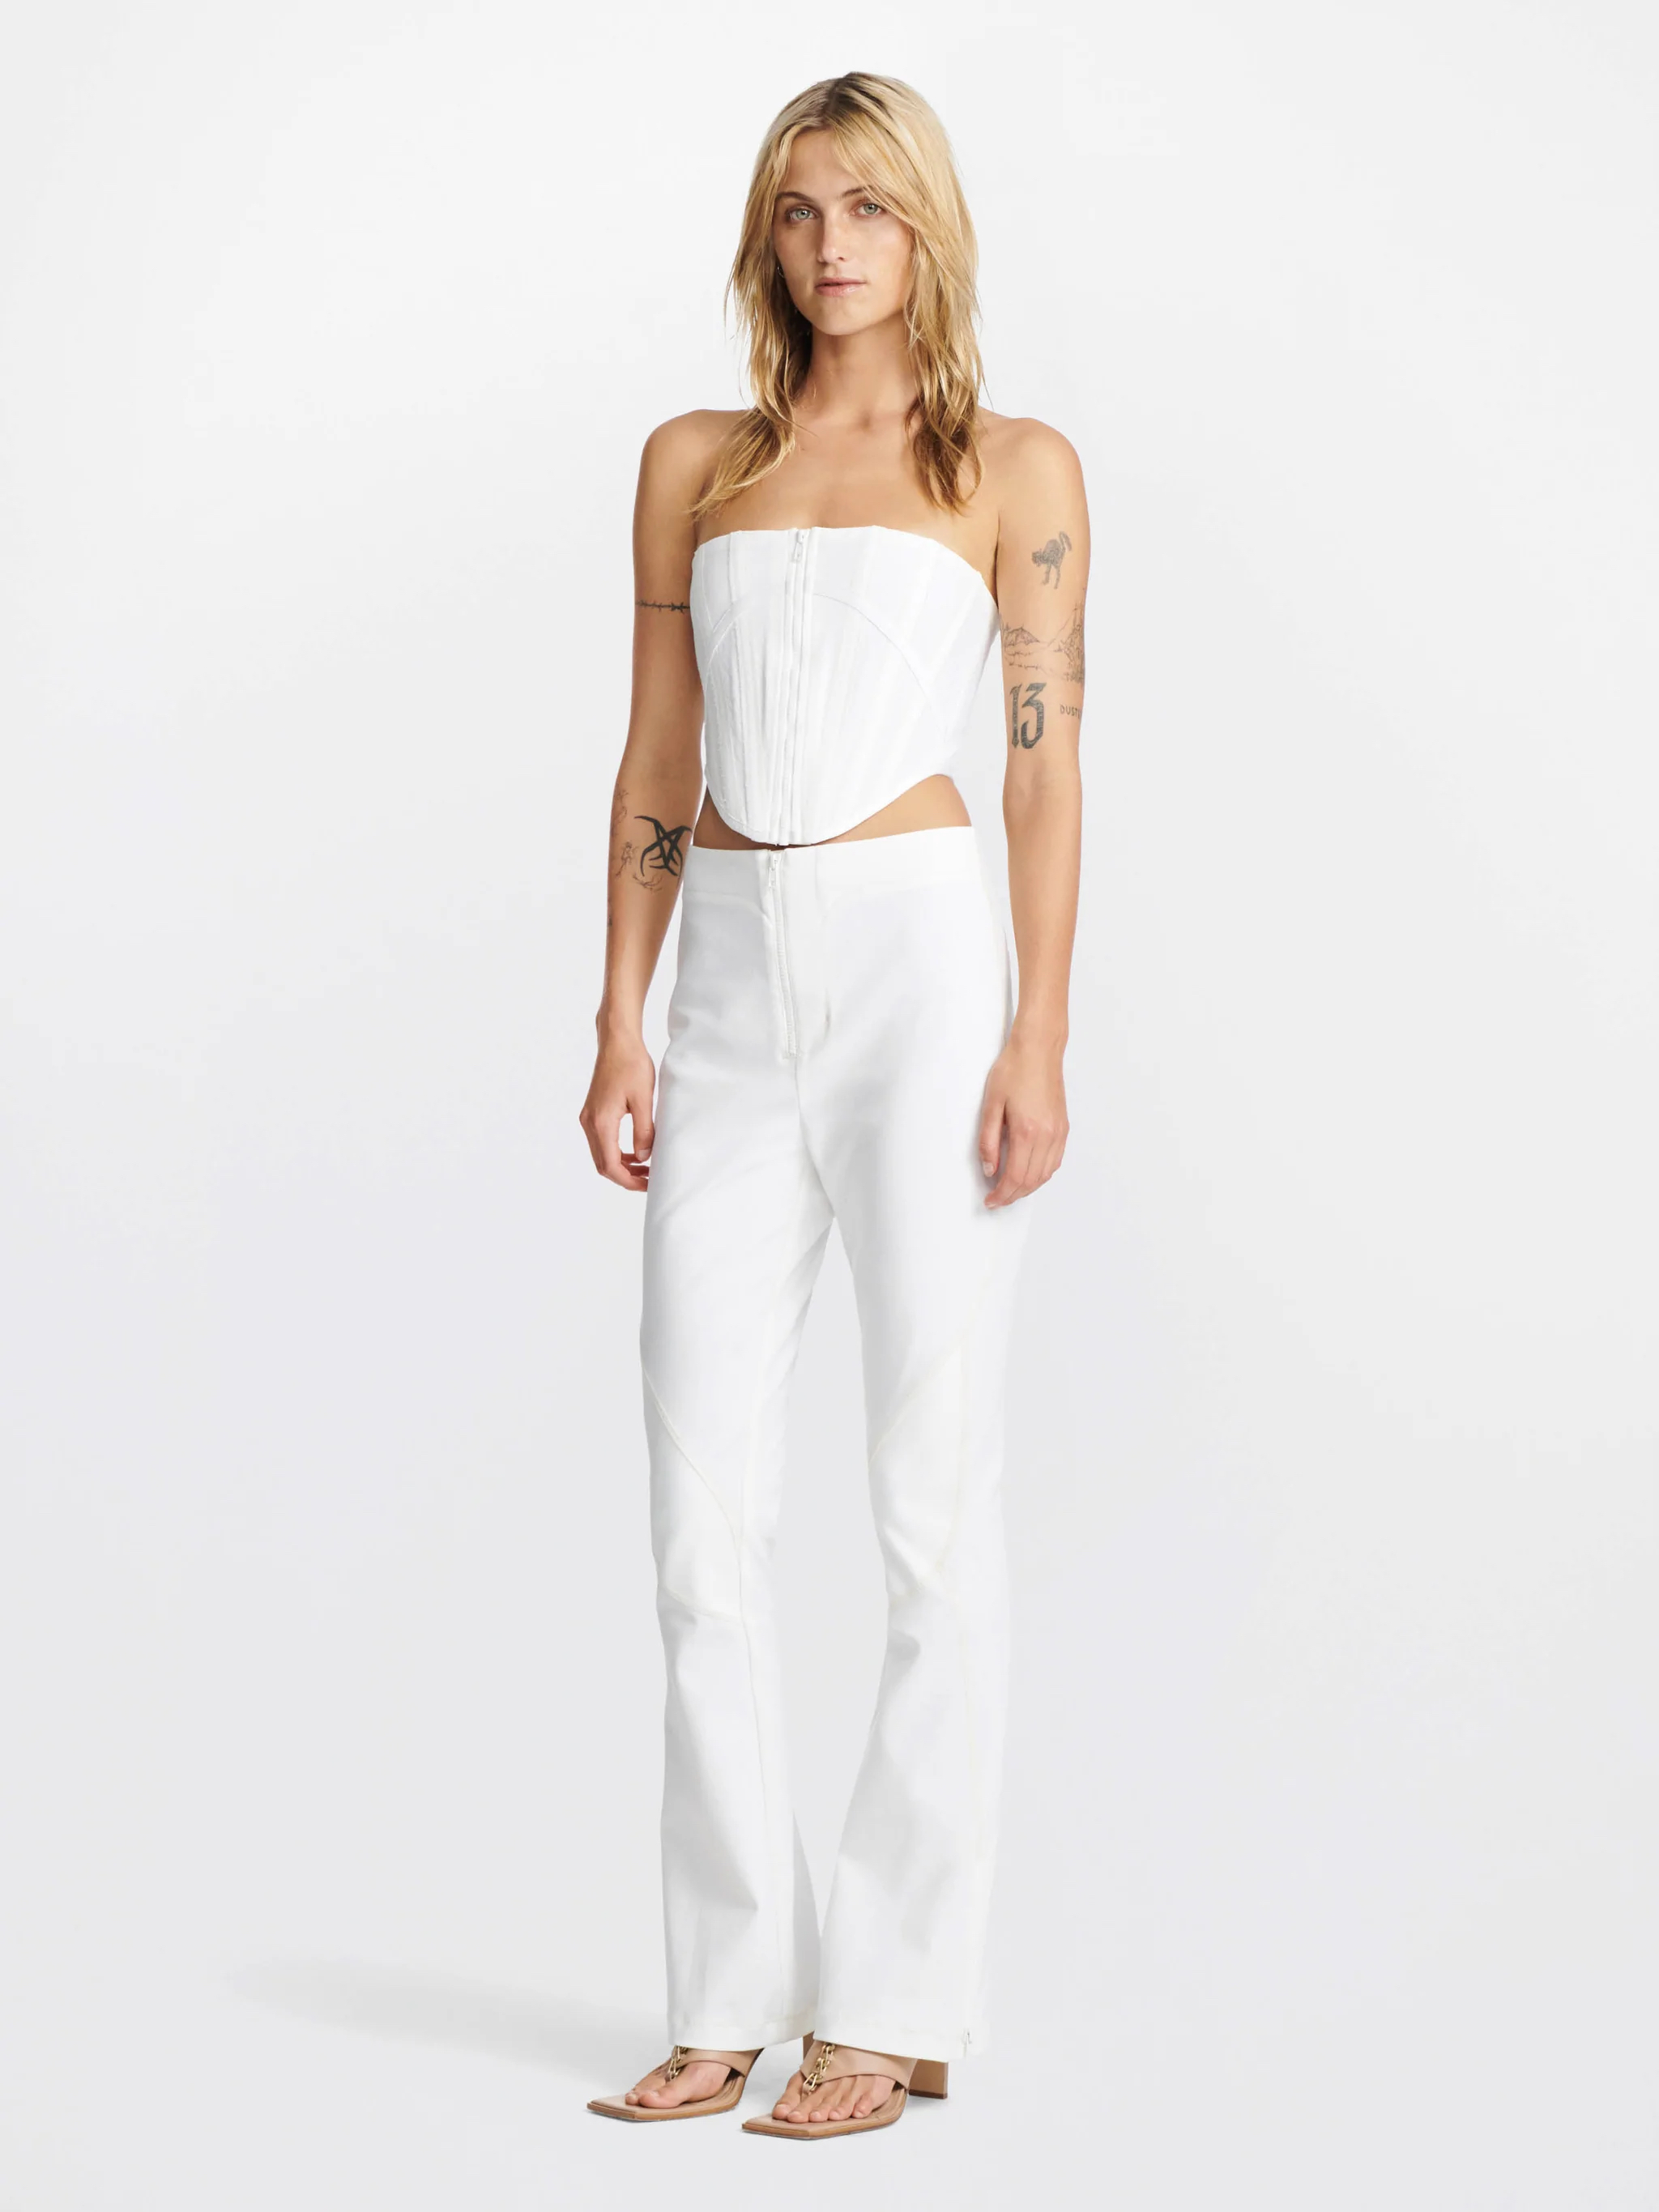 Anne Curtis reveals fashion essential: white T-shirt